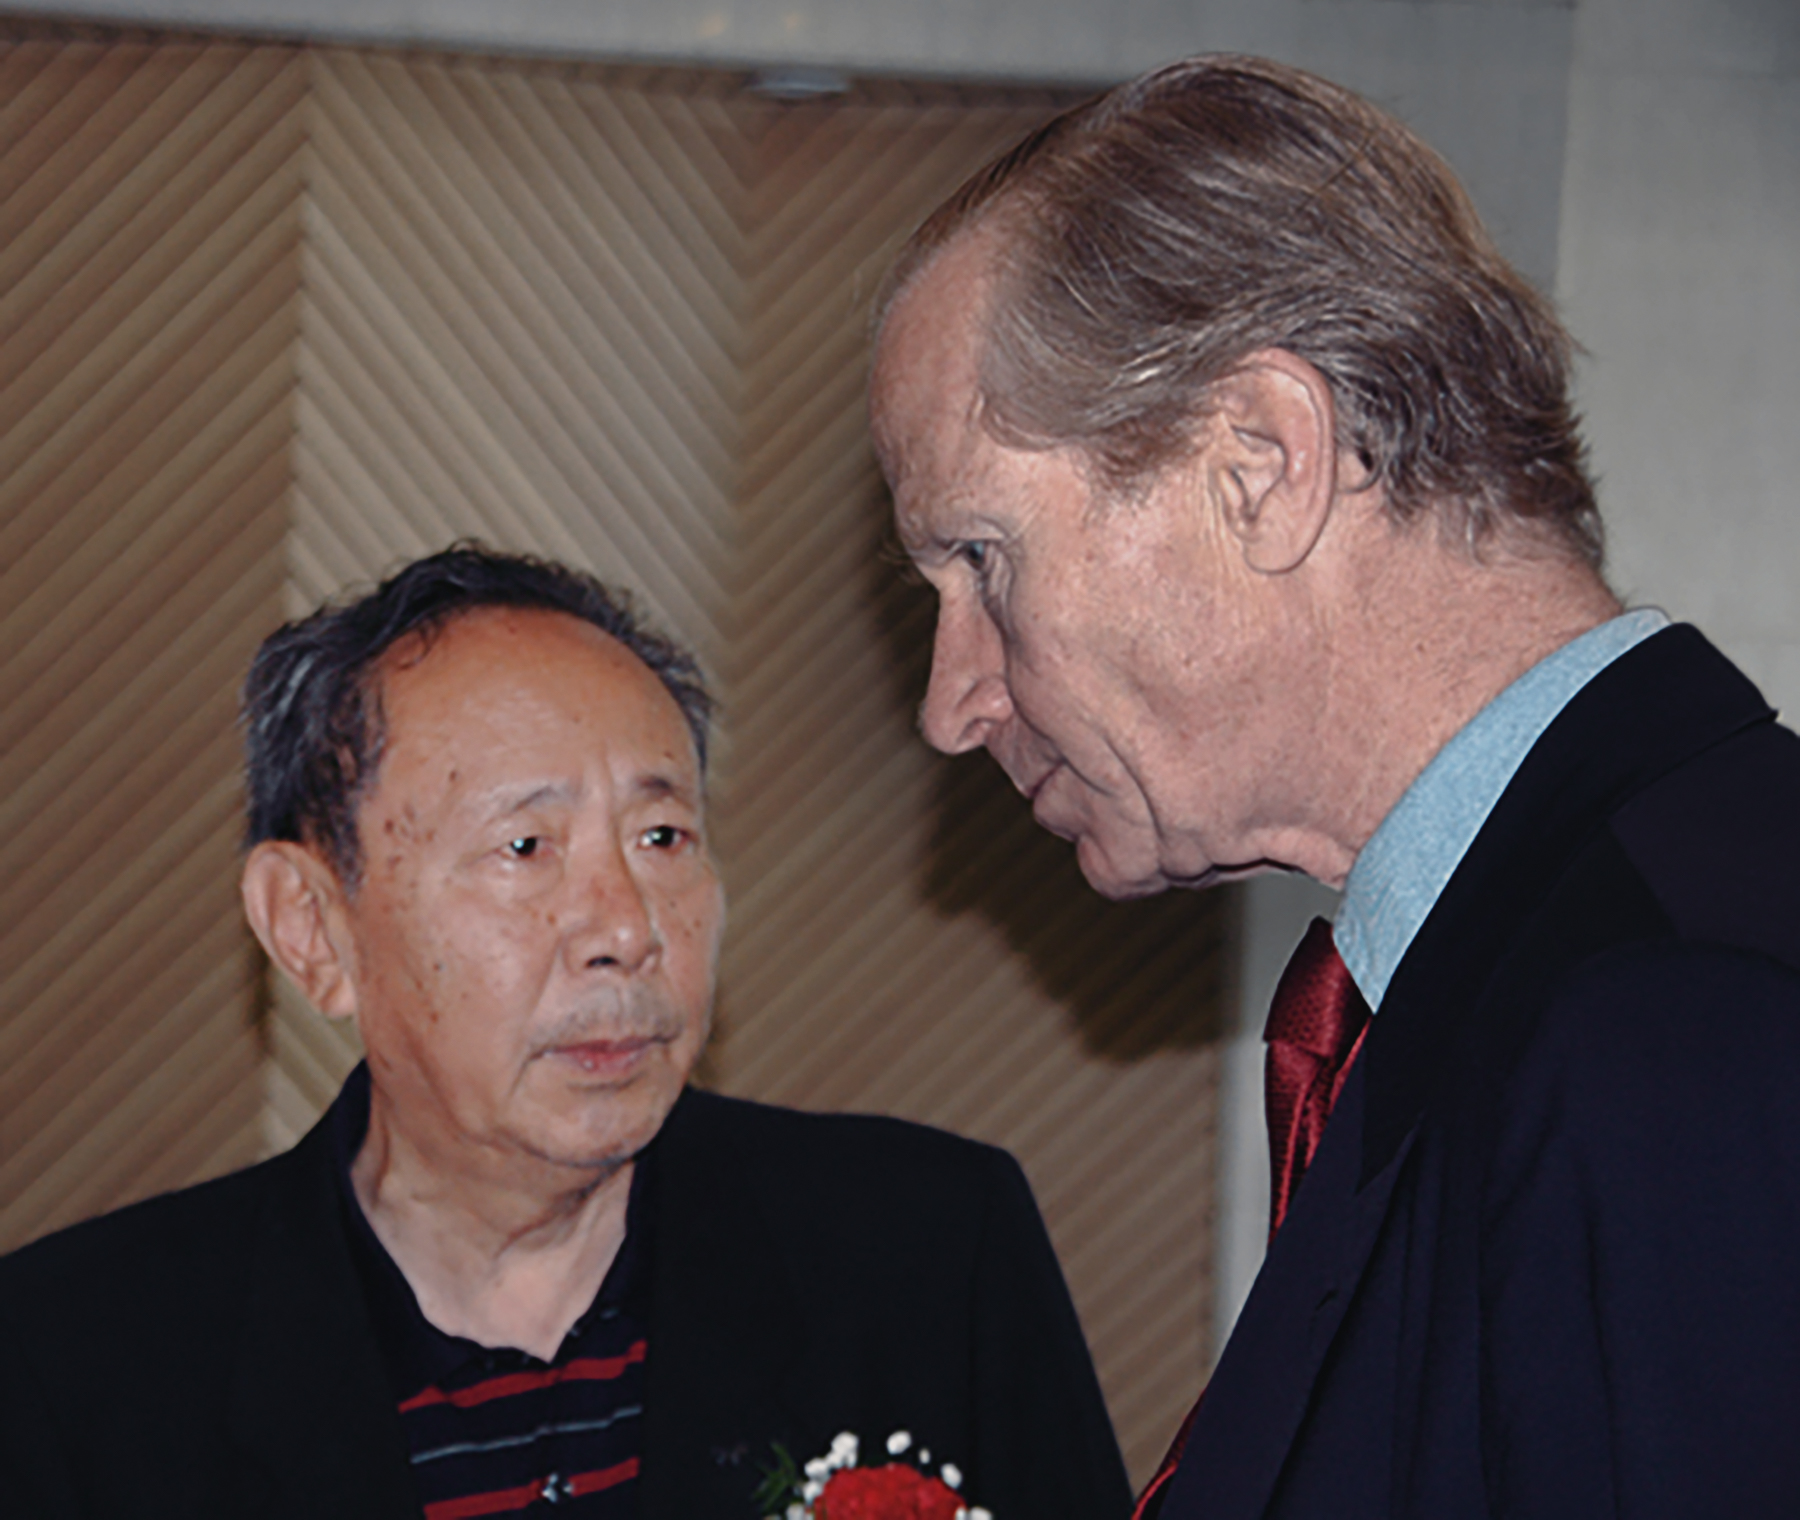 Professor Chen Zhao Fu and Bradshaw Foundation Chairman Damon de Laszlo